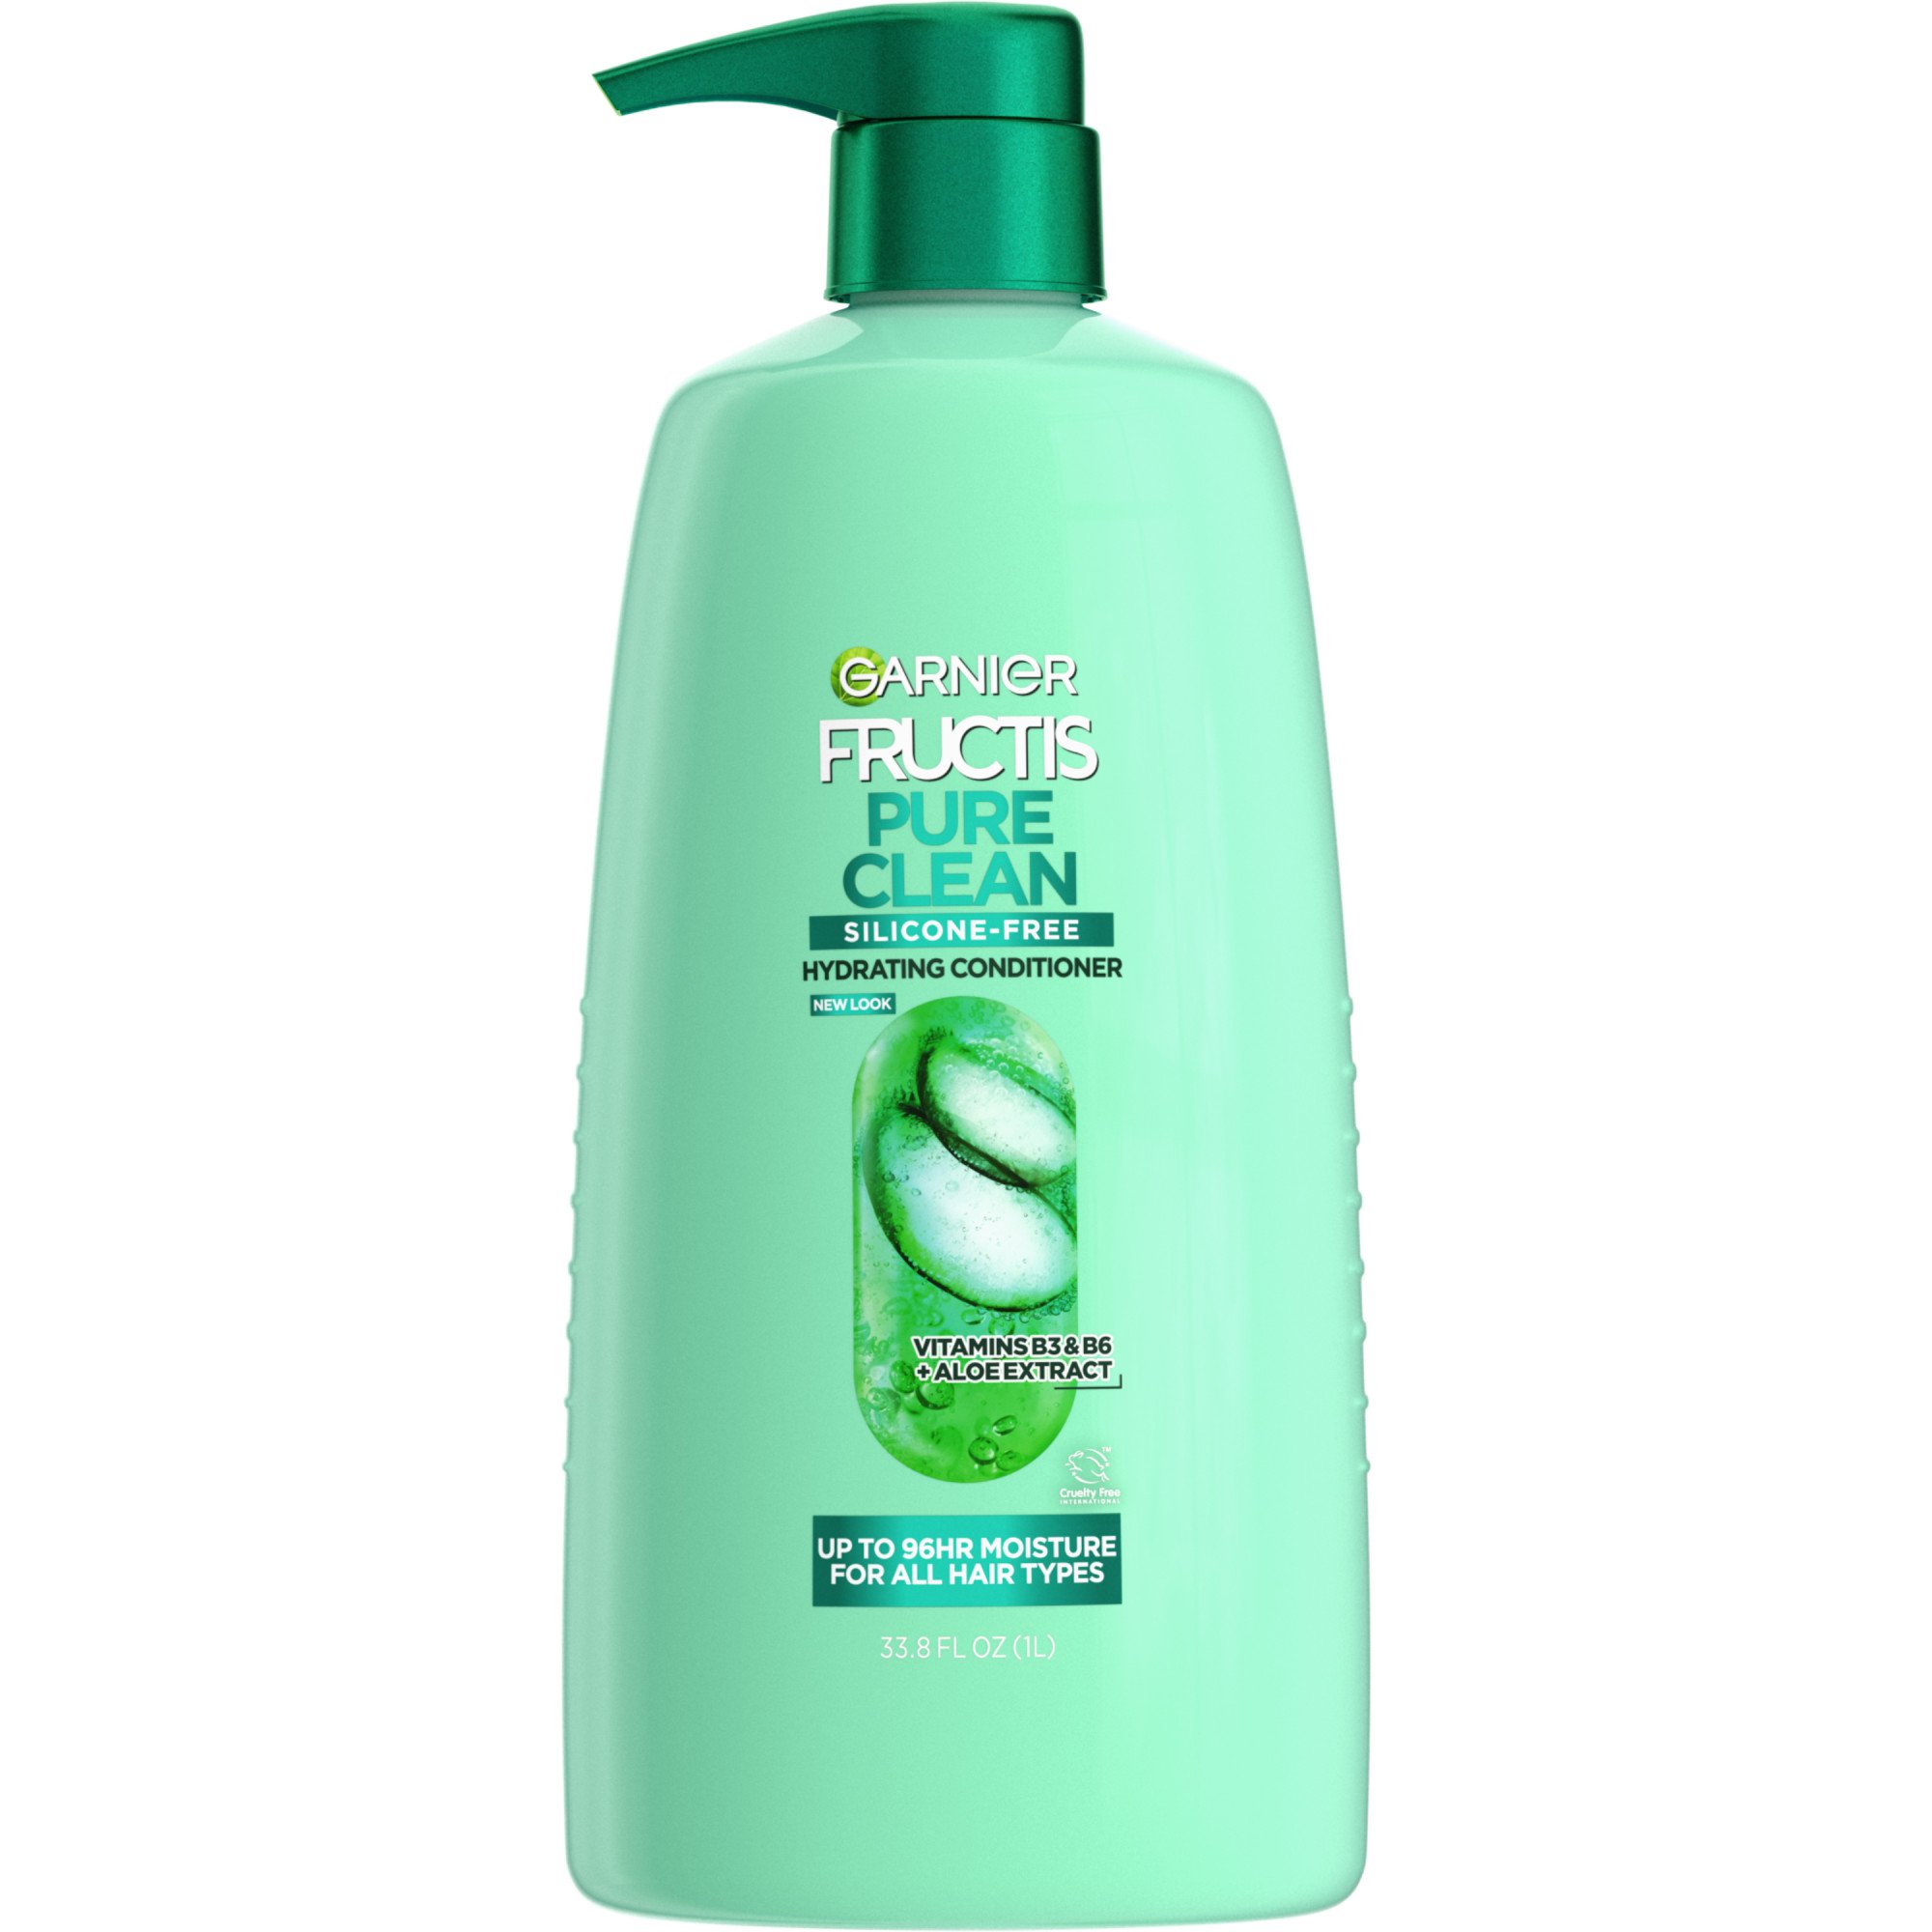 Shampoo Hydrating Pure Garnier H-E-B - Clean Conditioner Conditioner & Fructis Shop at